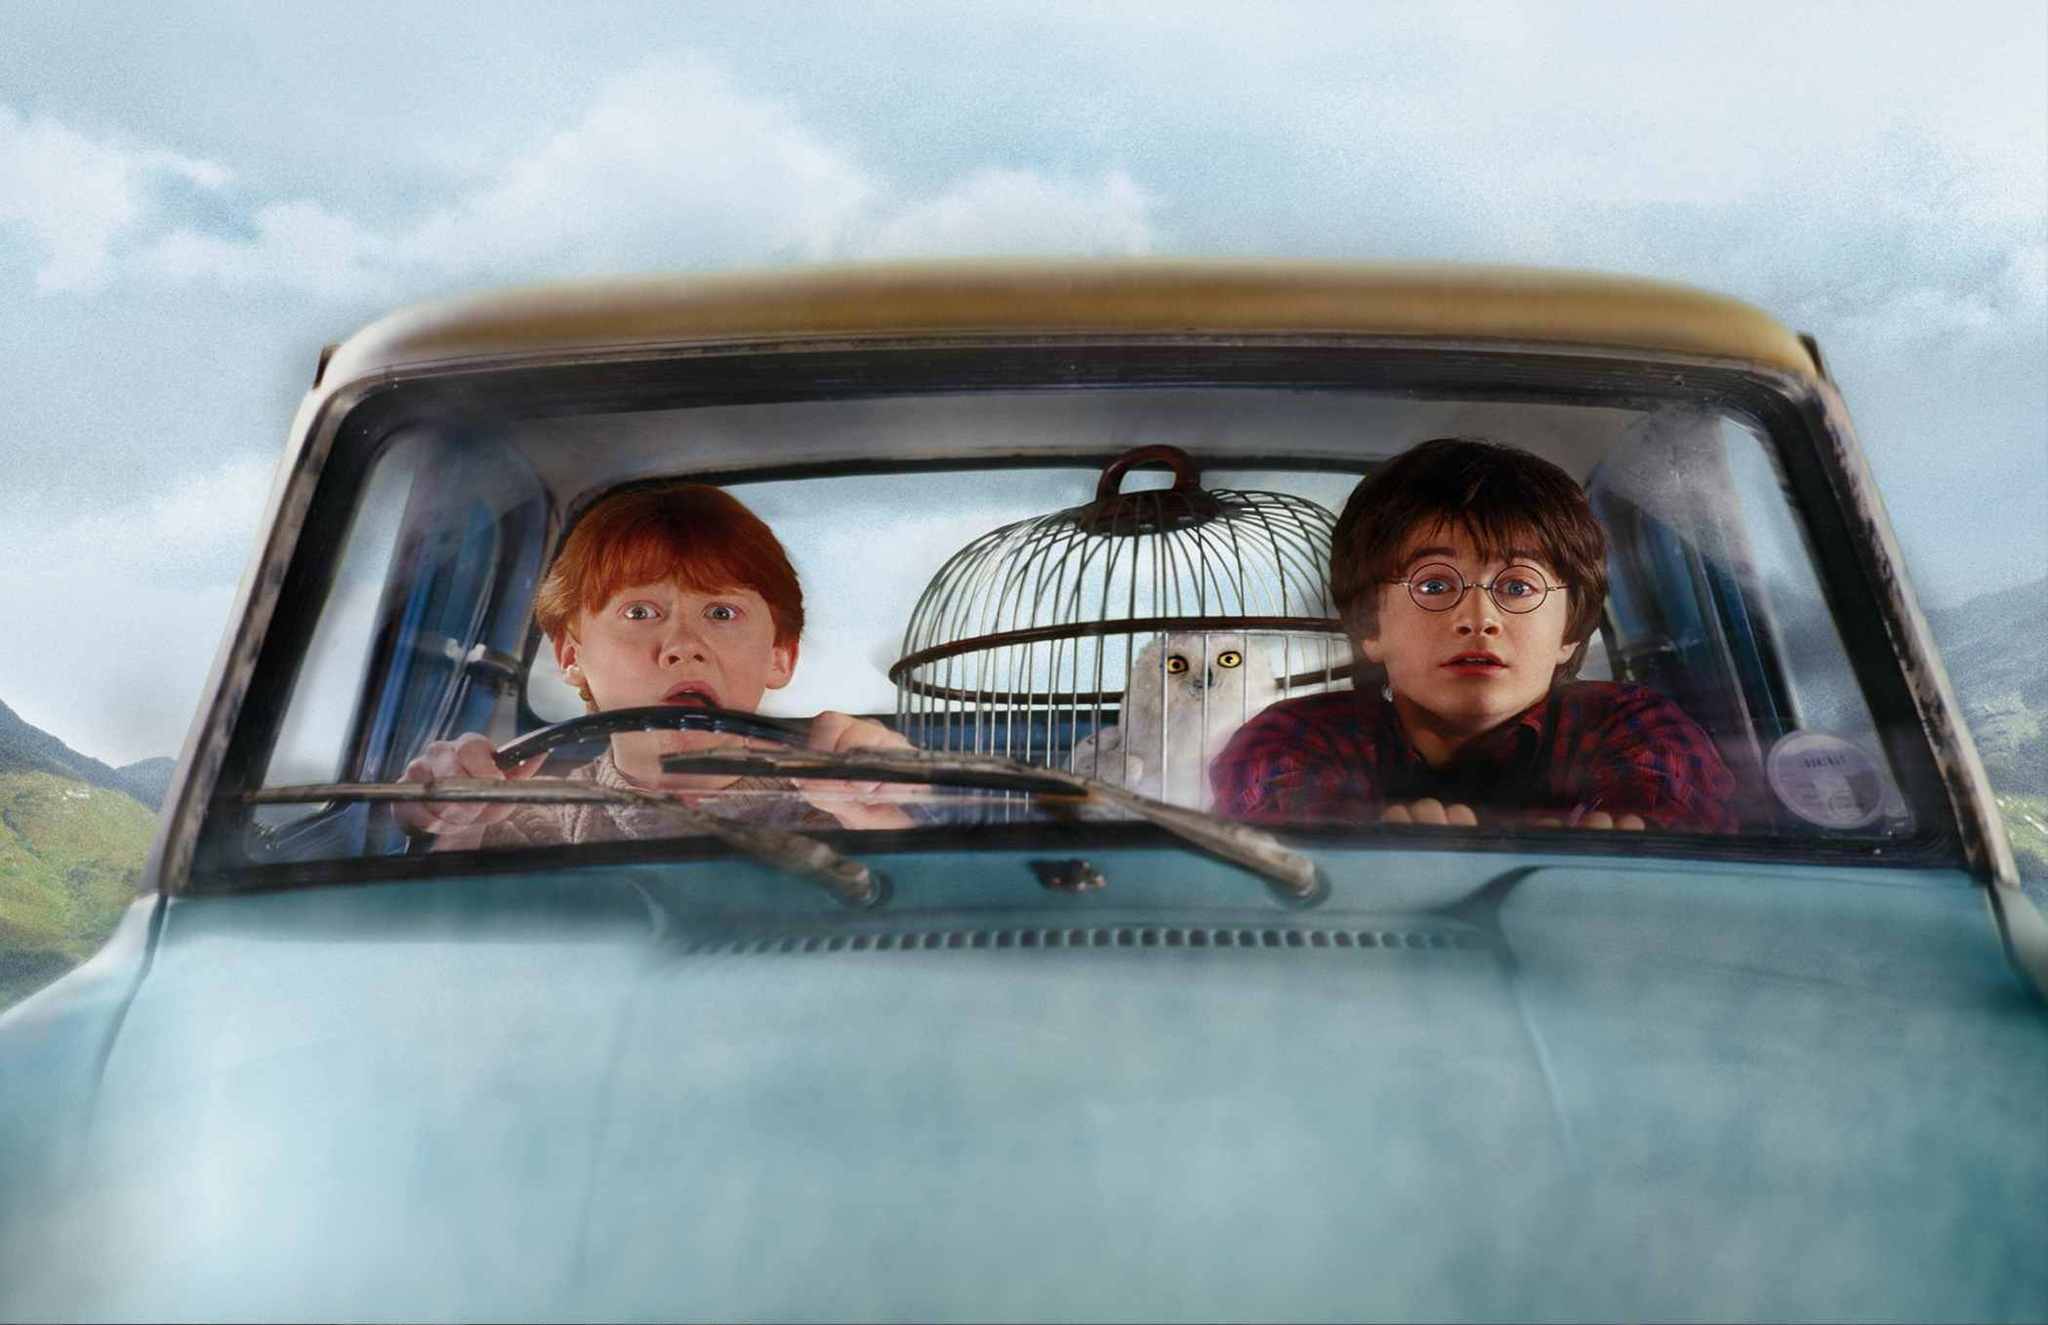 Still of Rupert Grint and Daniel Radcliffe in Haris Poteris ir paslapciu kambarys (2002)